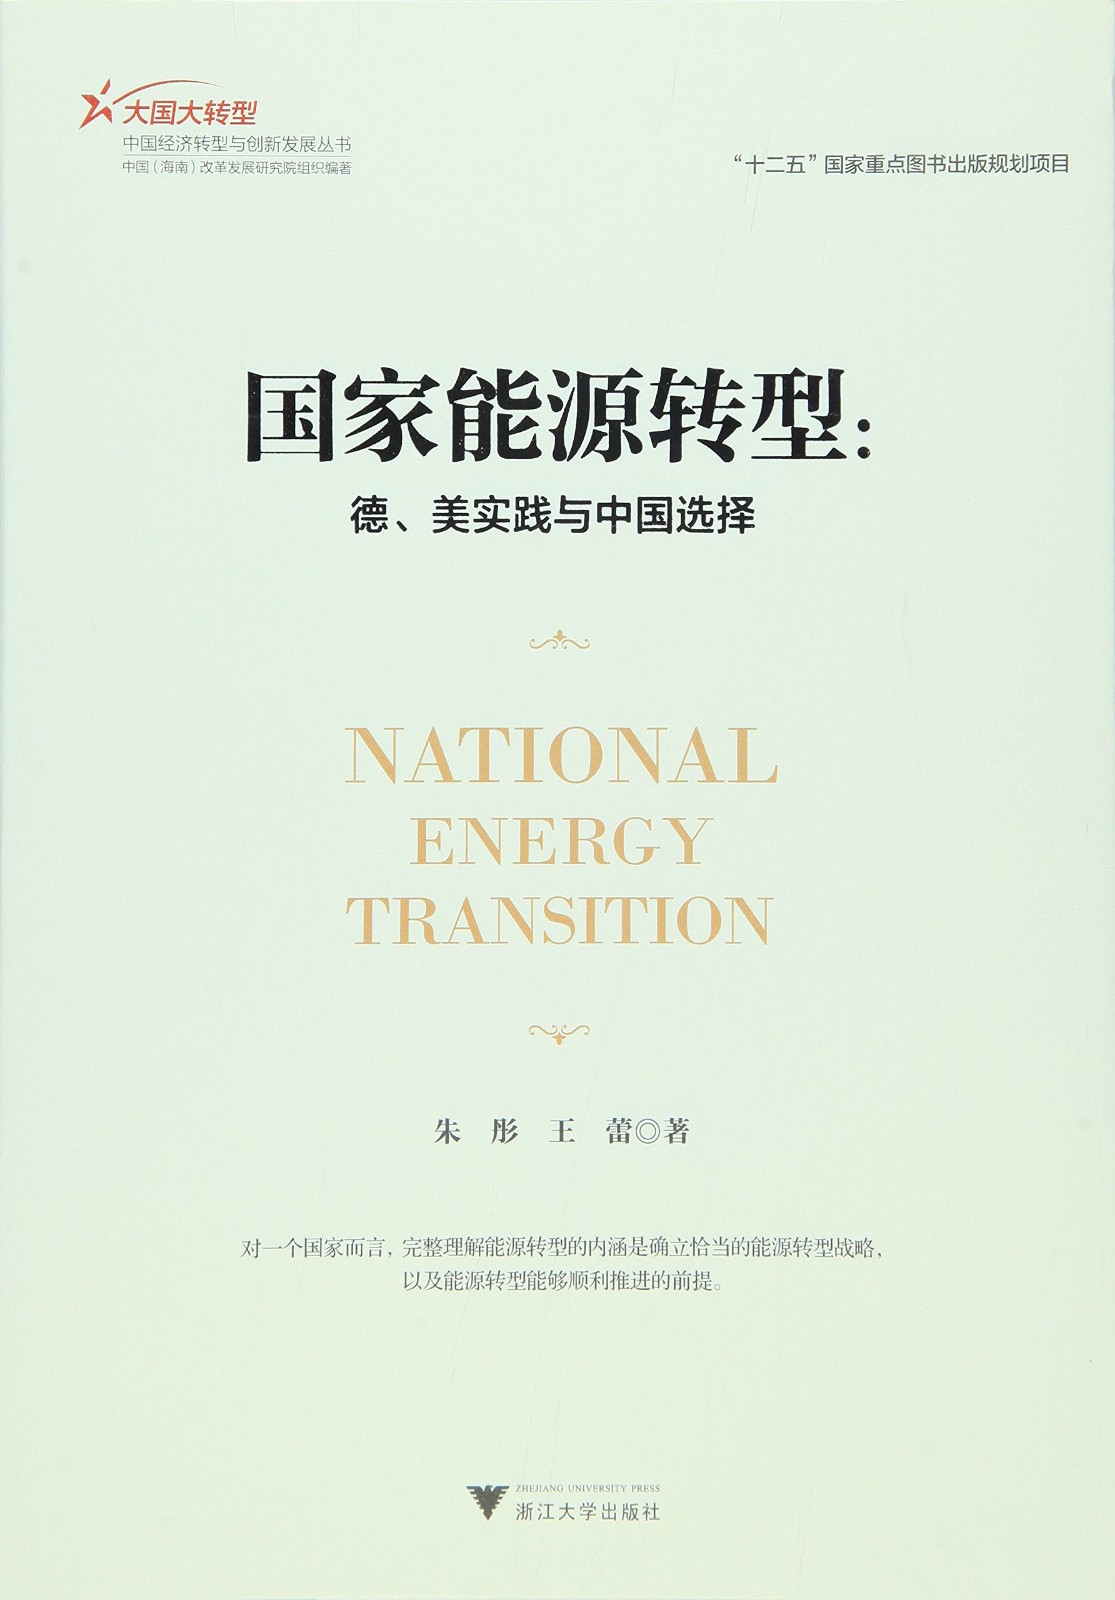 National Energy Transition